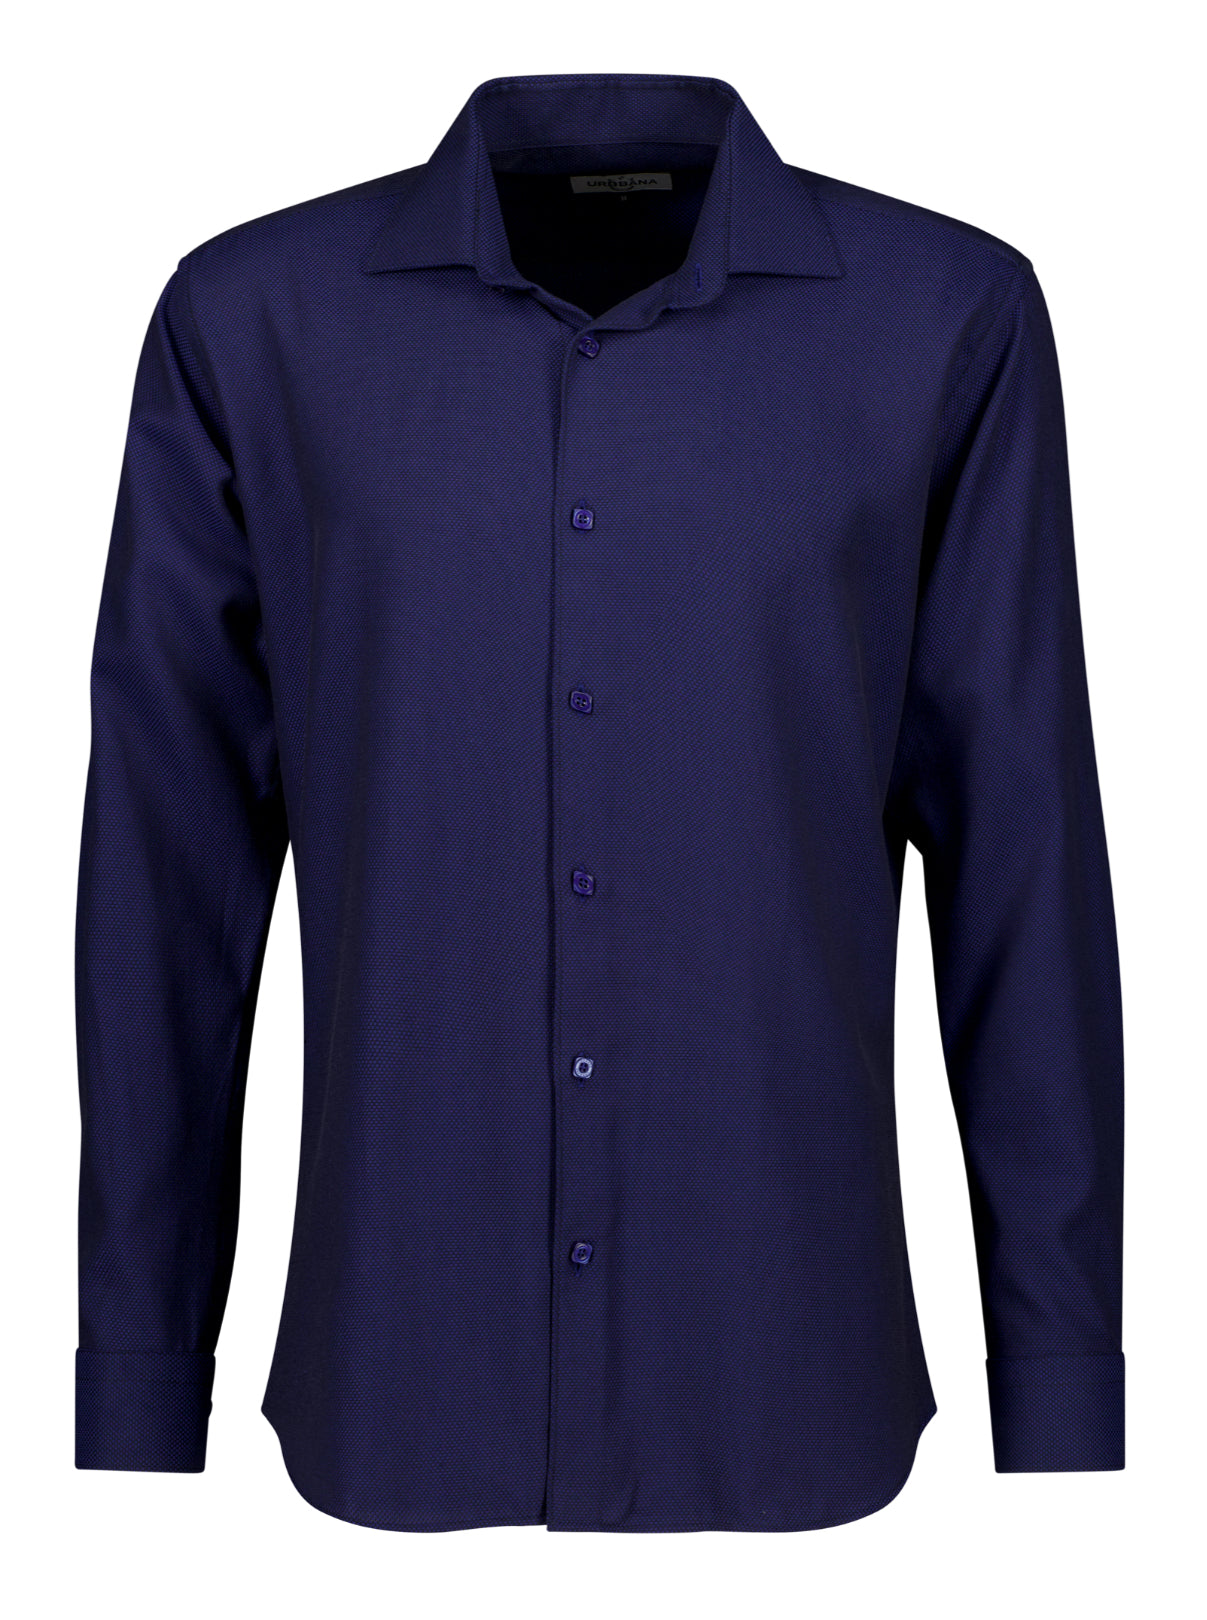 The Blue Knit Shirt - Shirt by Urbbana